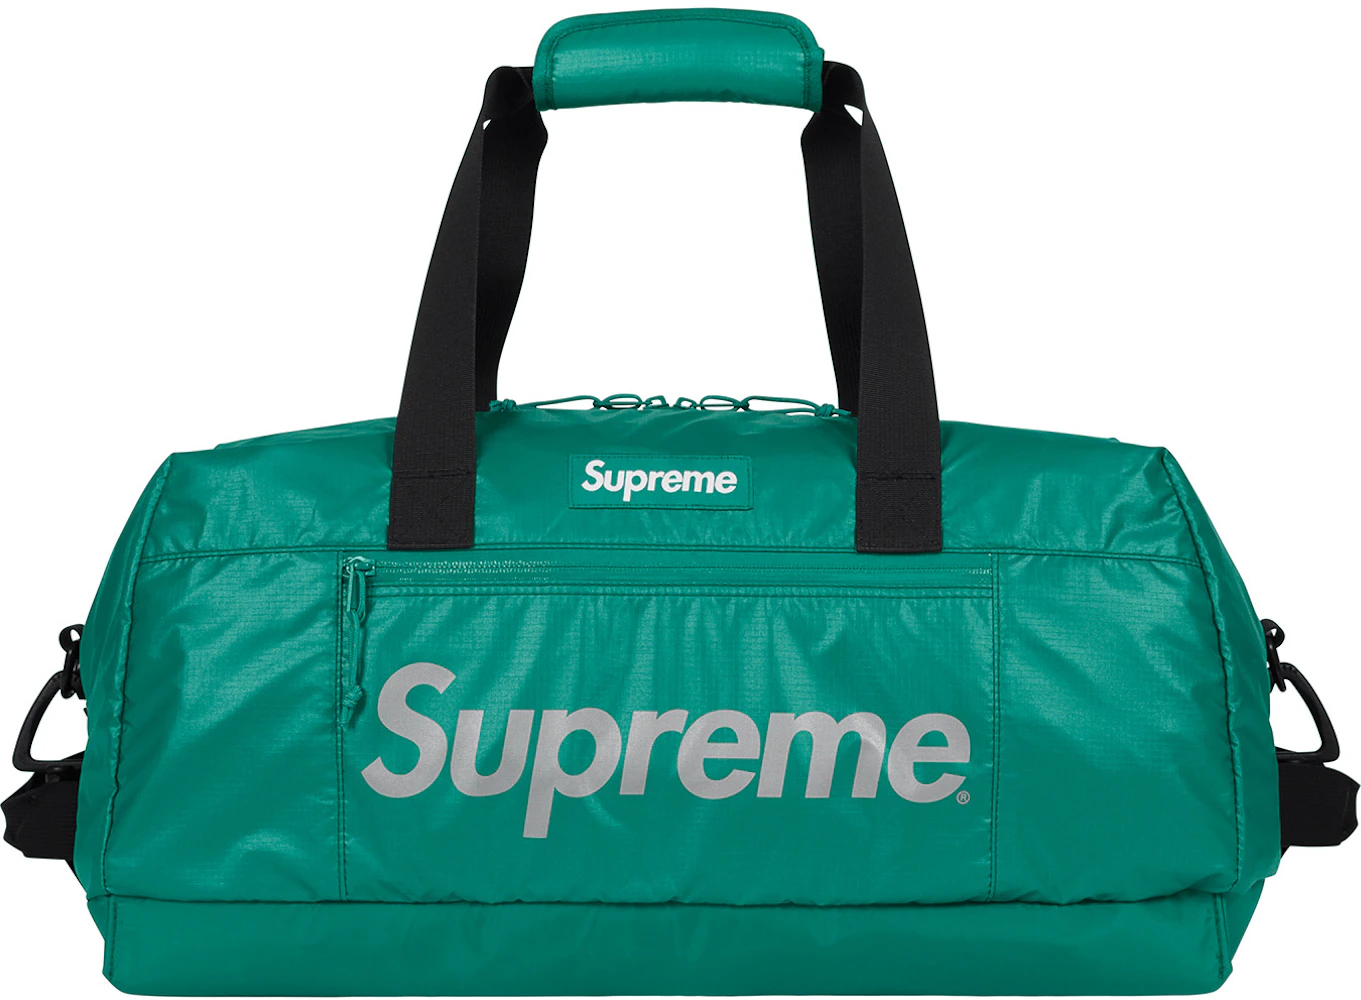 Supreme Duffle Bag Blue – STEALPLUG KL